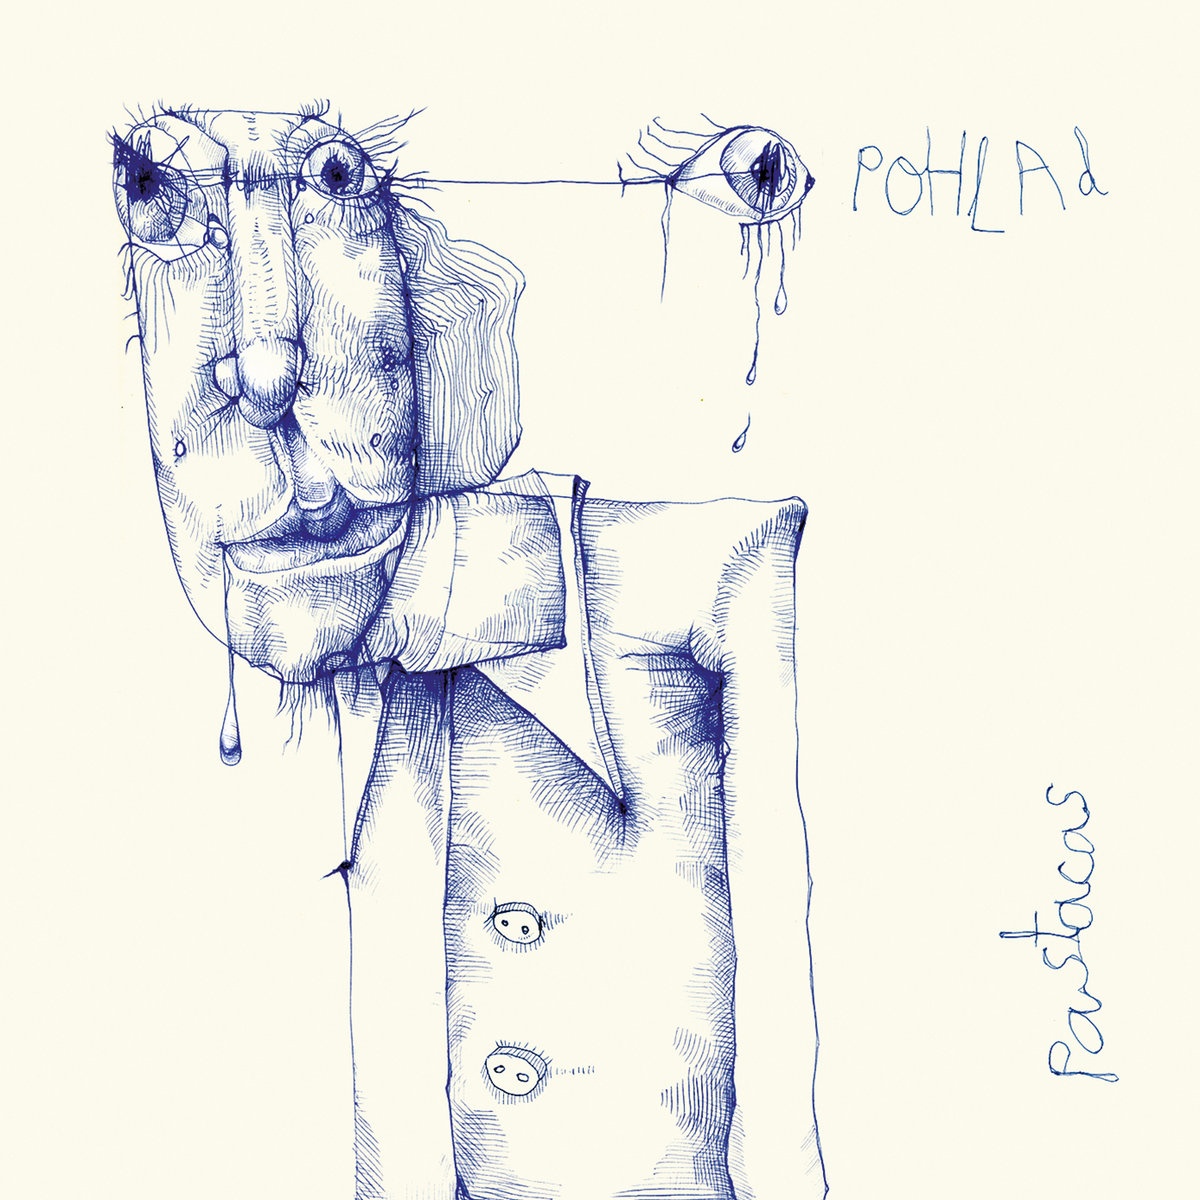 Pastacas - Pohlad vinyl cover